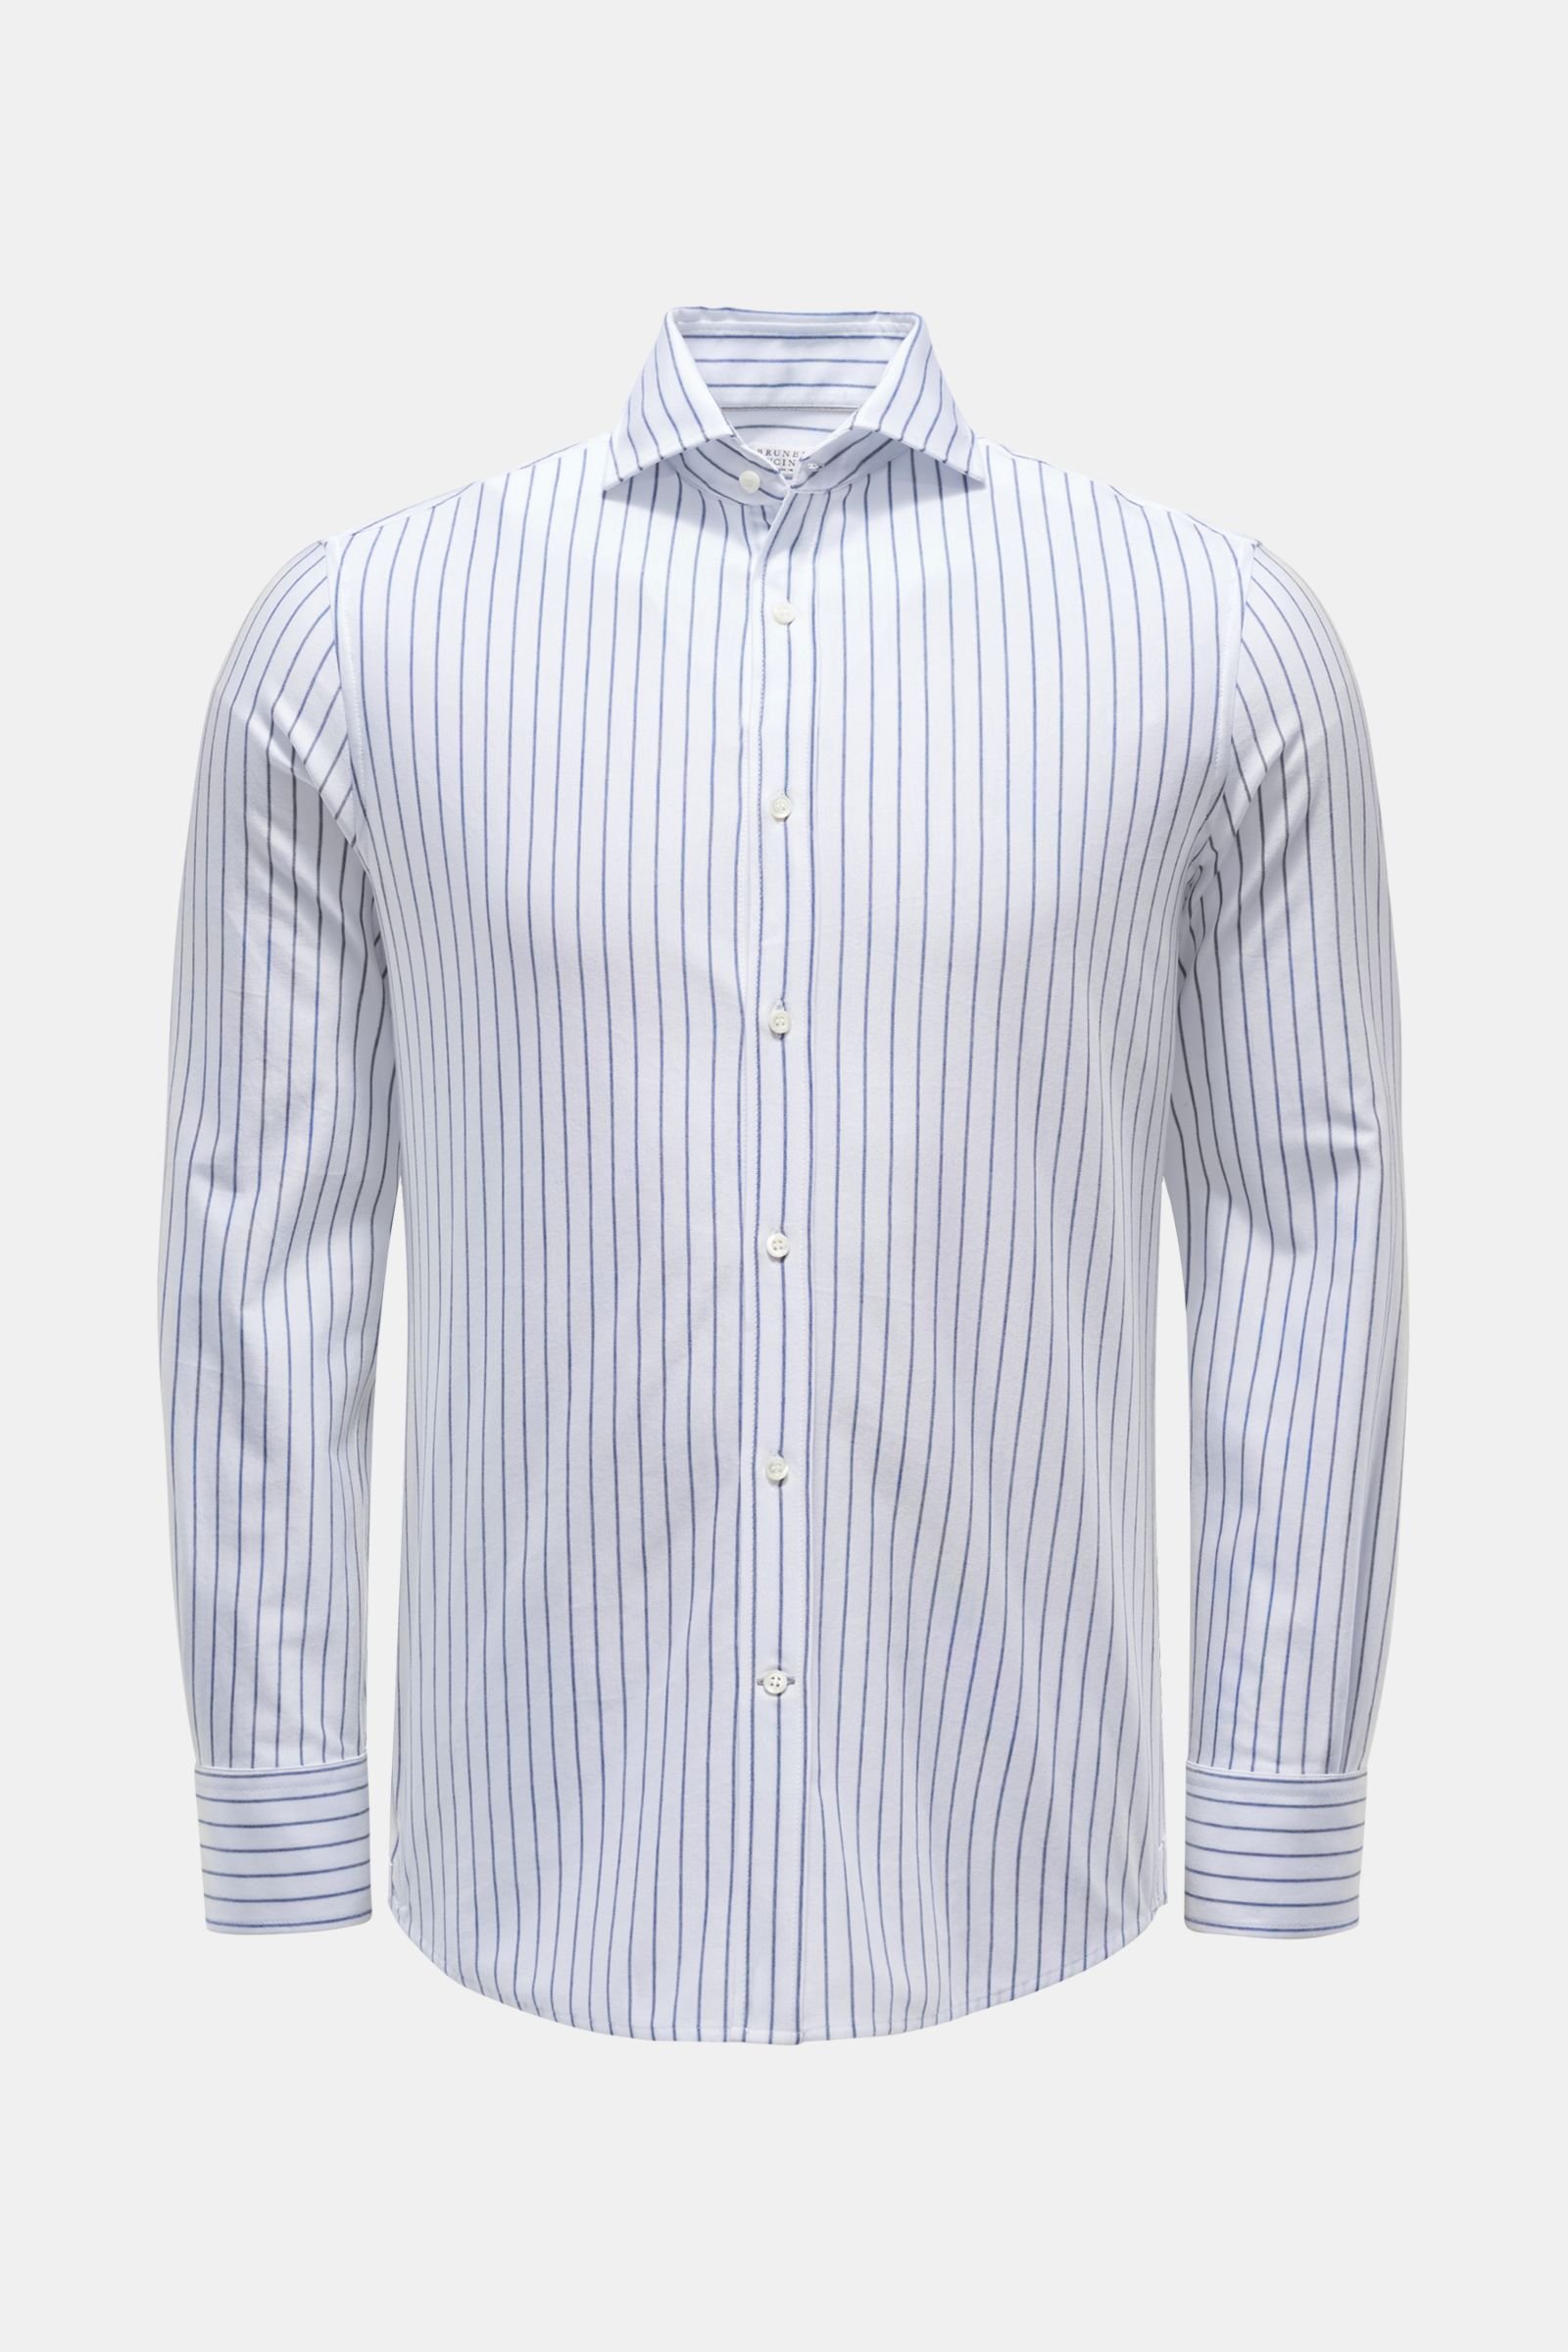 Jersey shirt shark collar white/navy striped